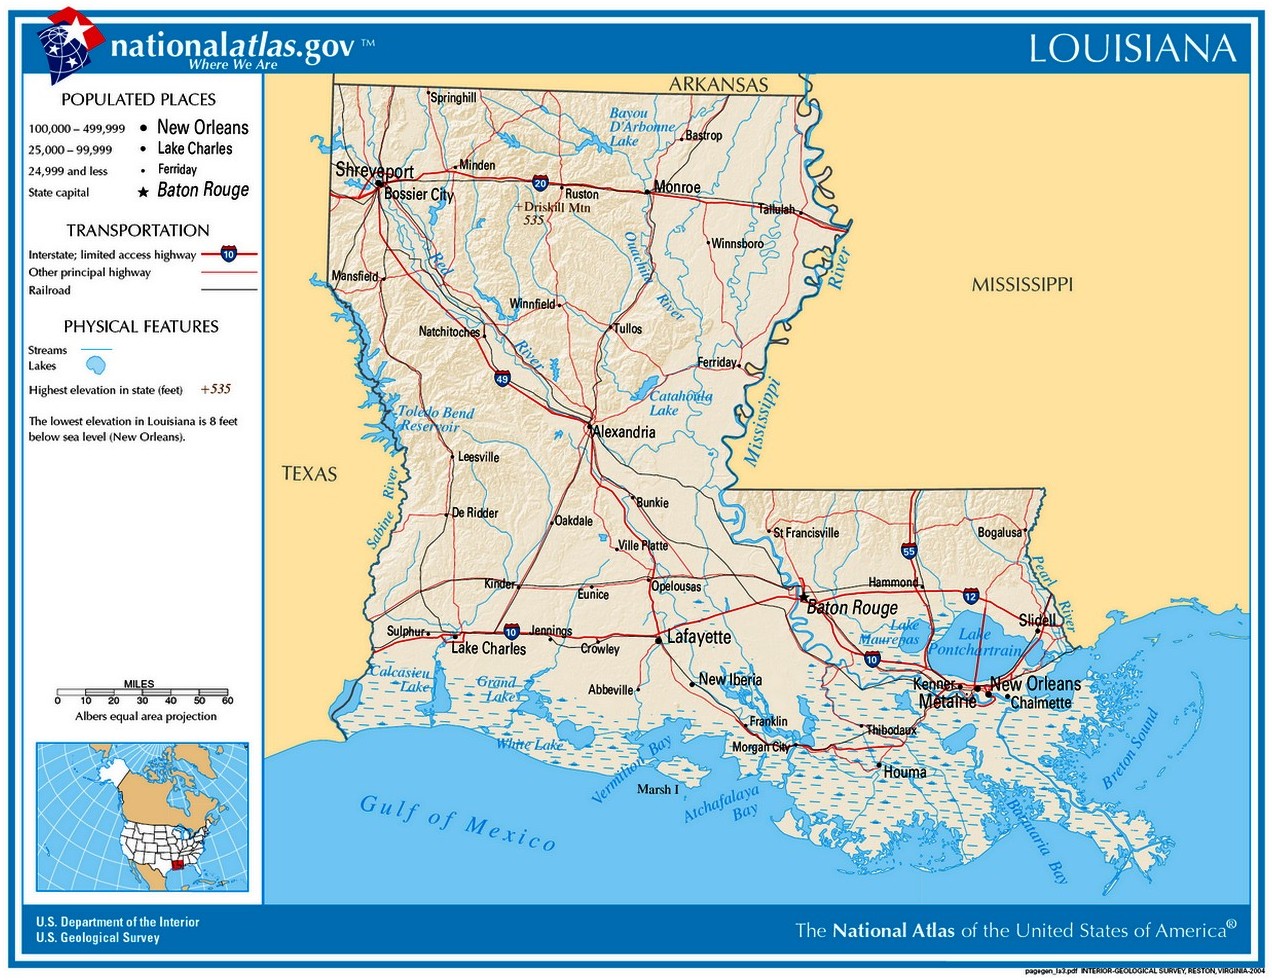 civil war battles in louisiana map Louisiana Civil War History Battles Soldiers Casualties Army civil war battles in louisiana map